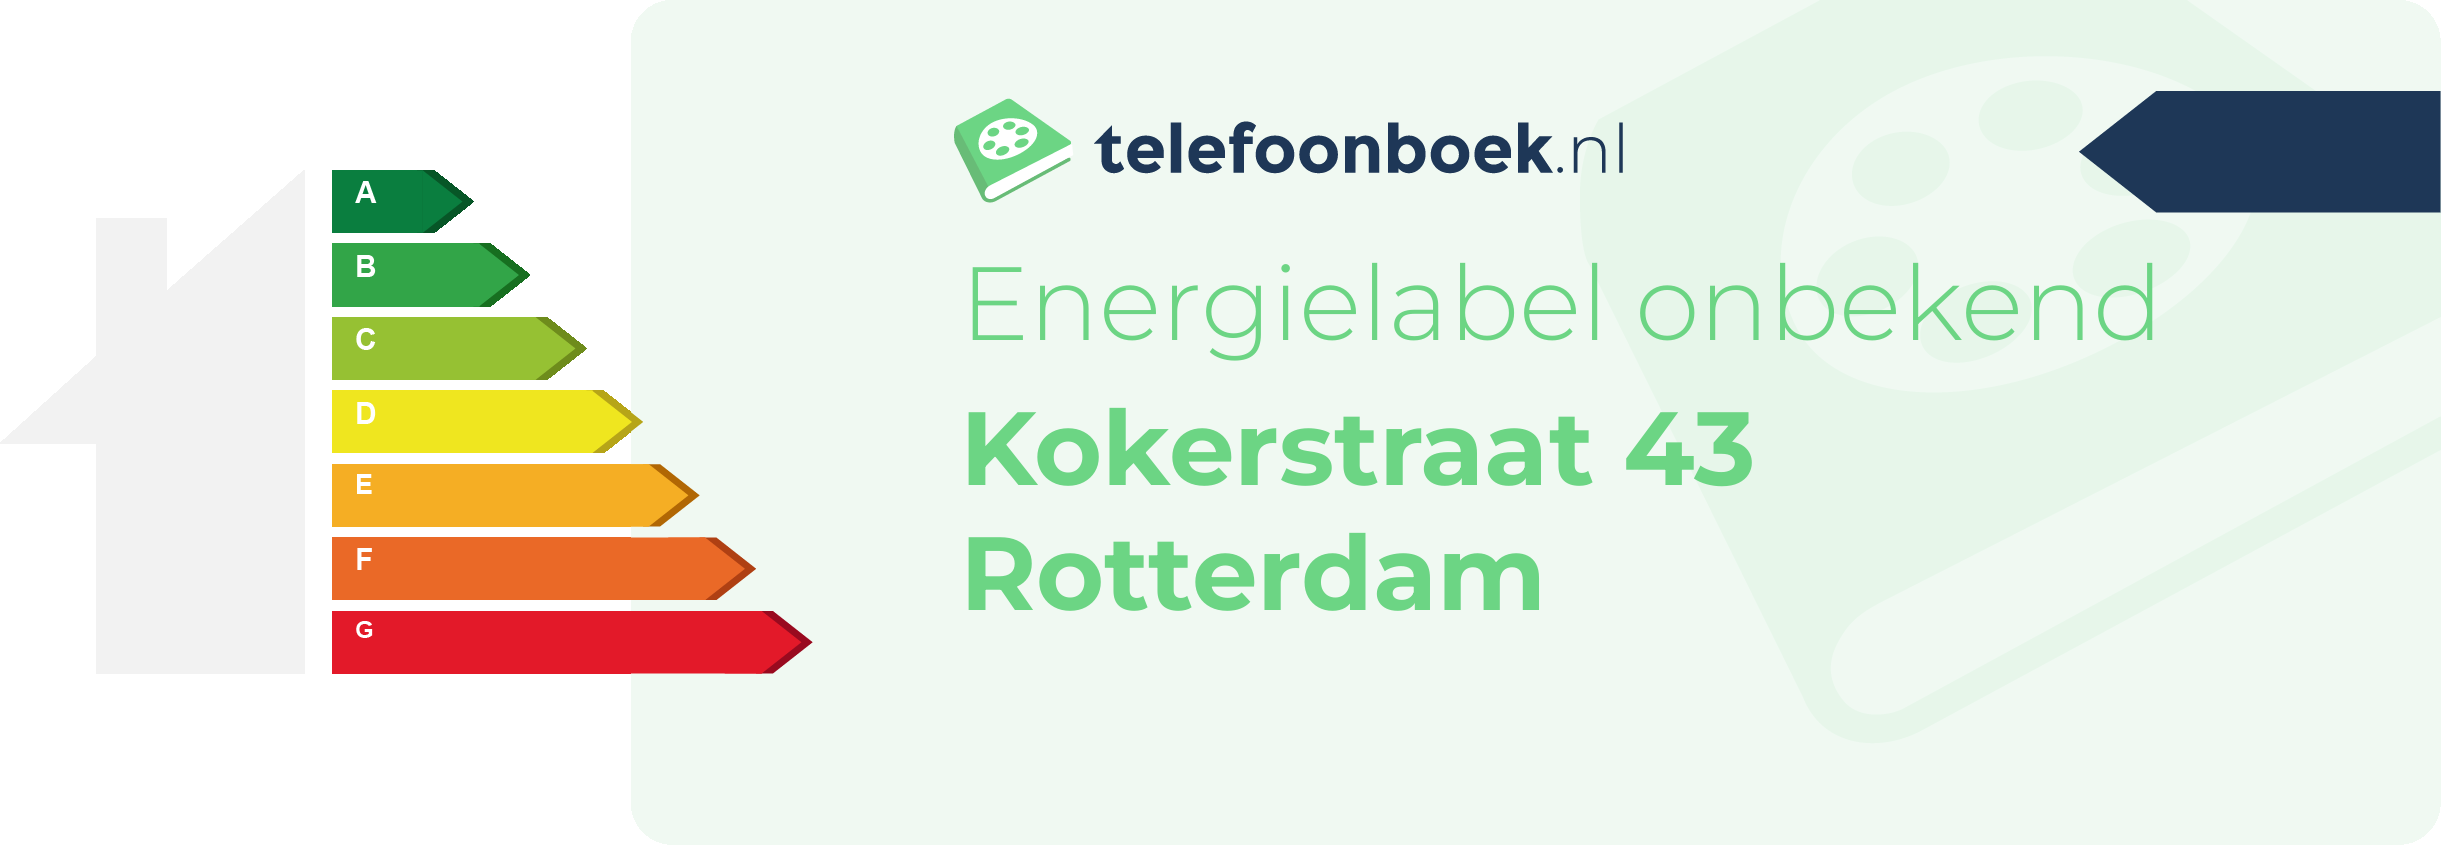 Energielabel Kokerstraat 43 Rotterdam